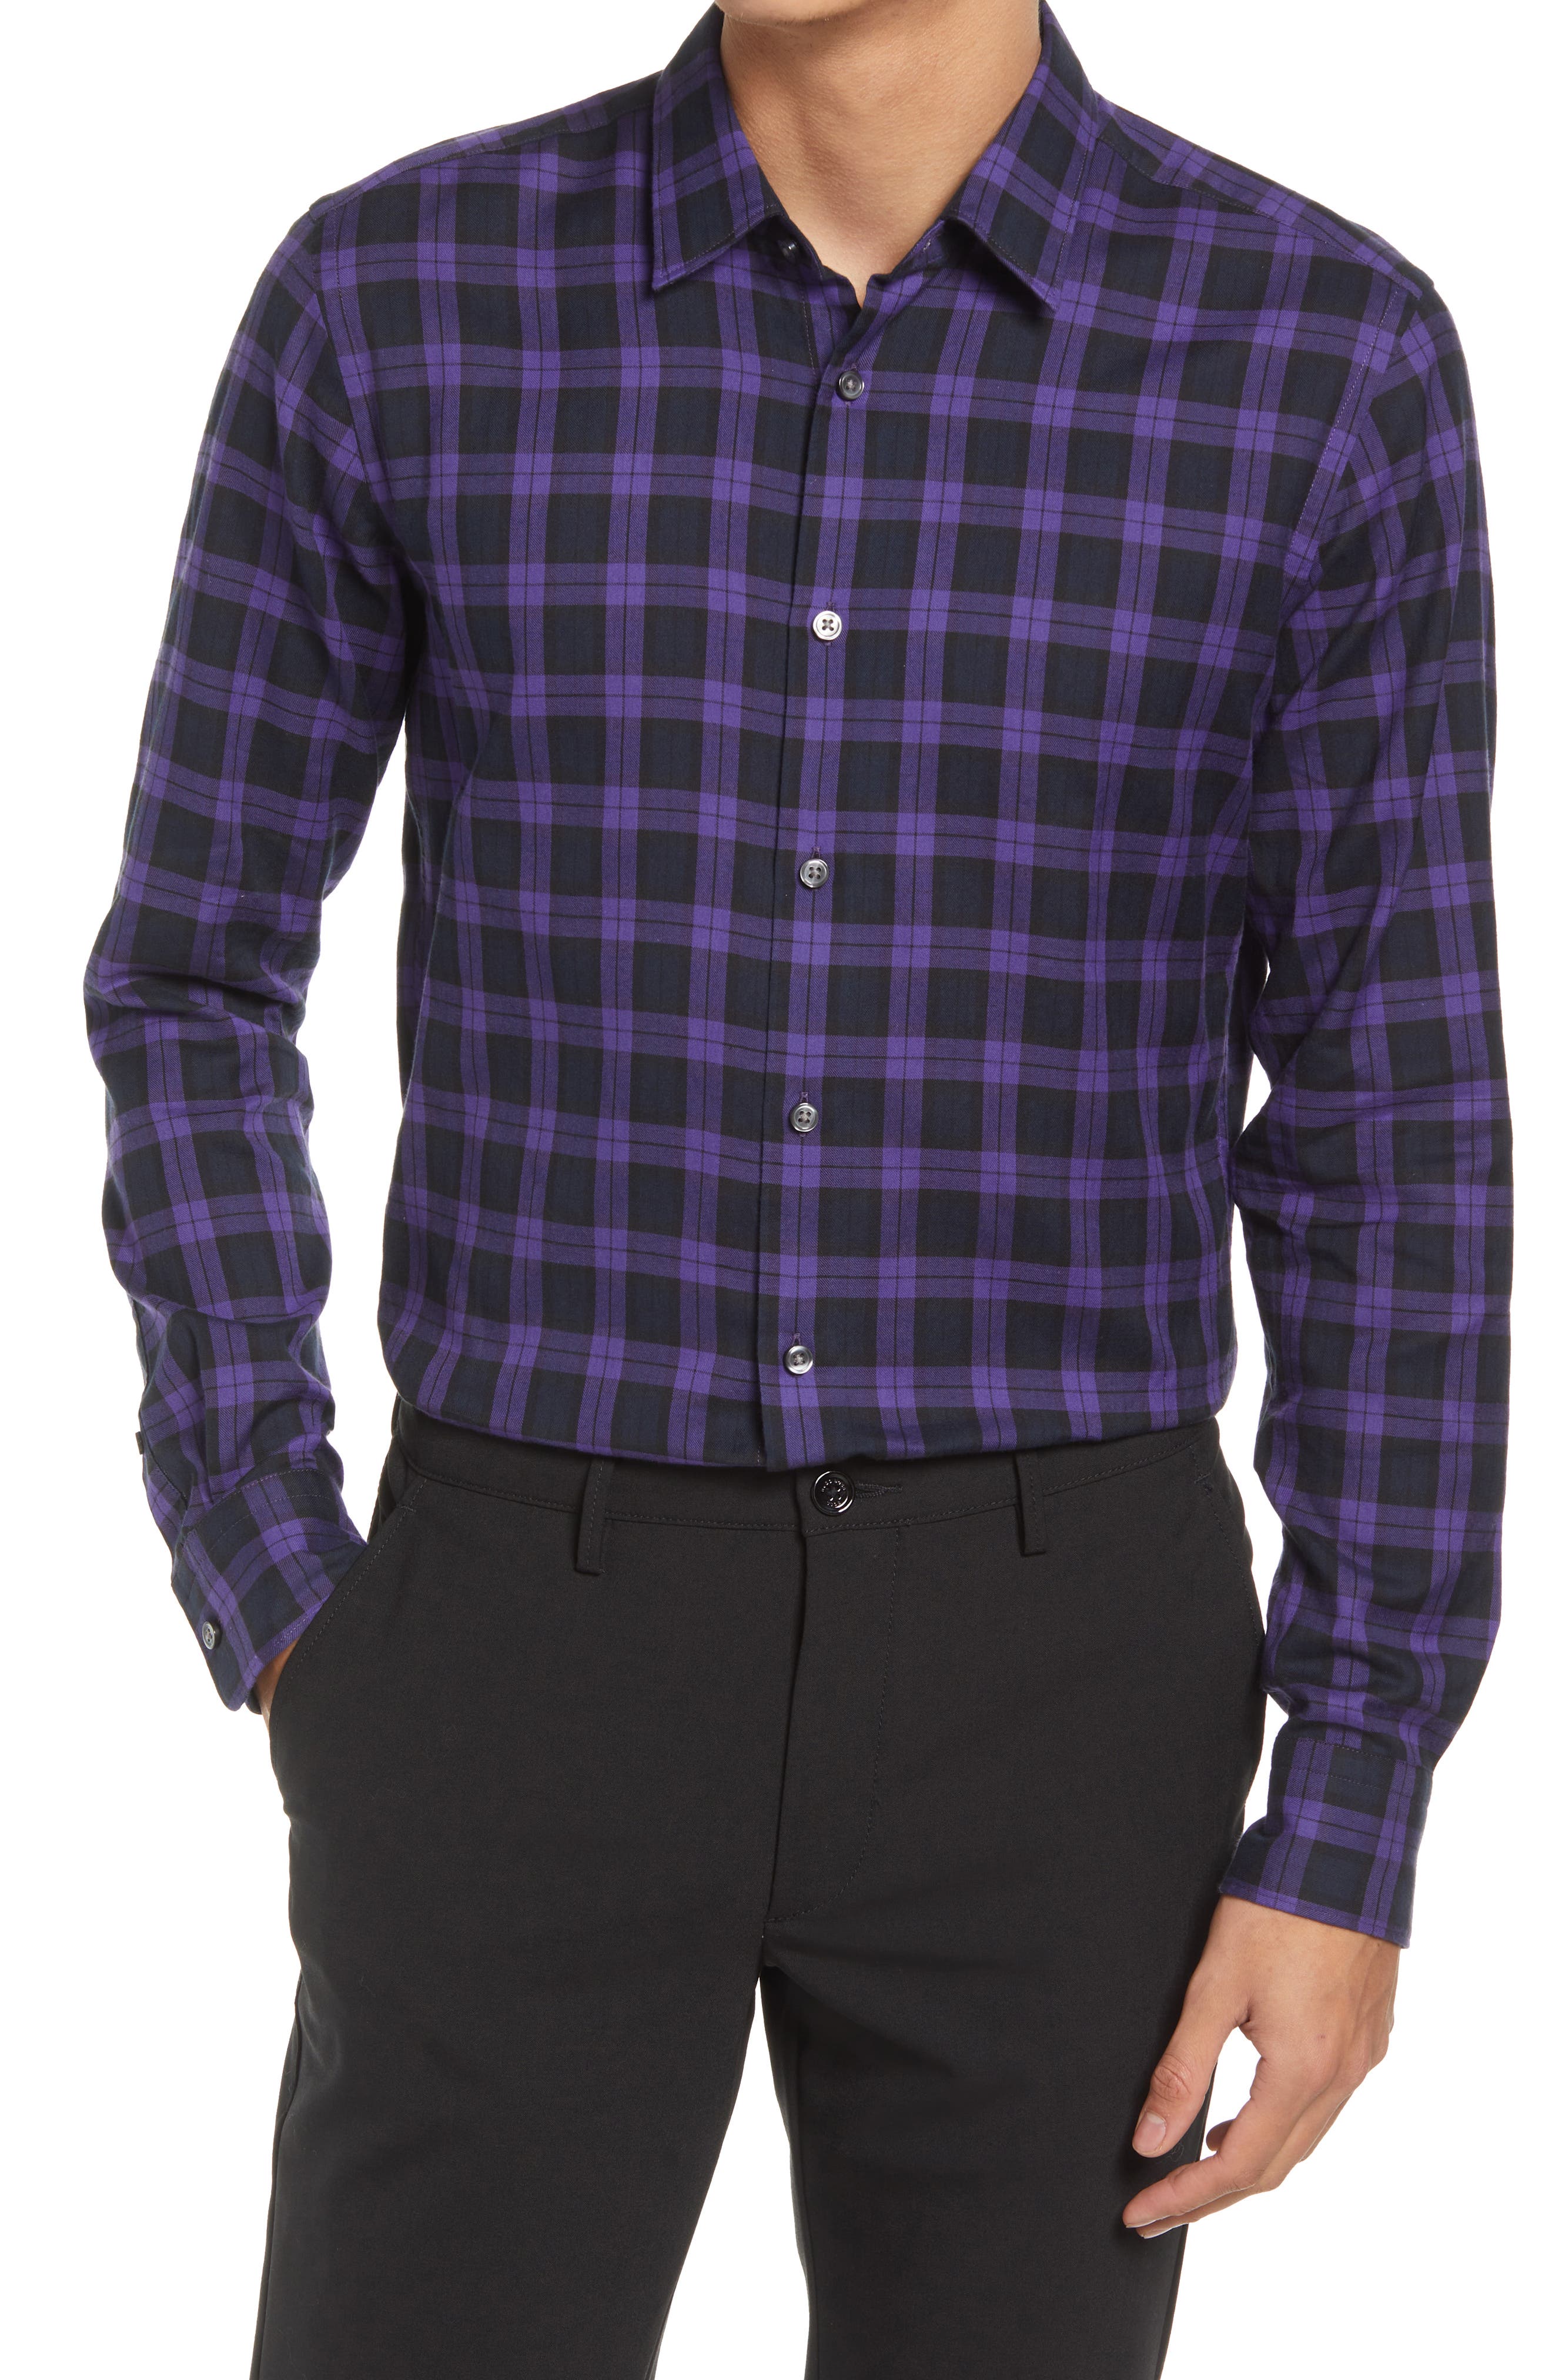 HUGO Reid Trim Fit Plaid Sport Shirt in Dark Blue/Purple at Nordstrom, Size Medium